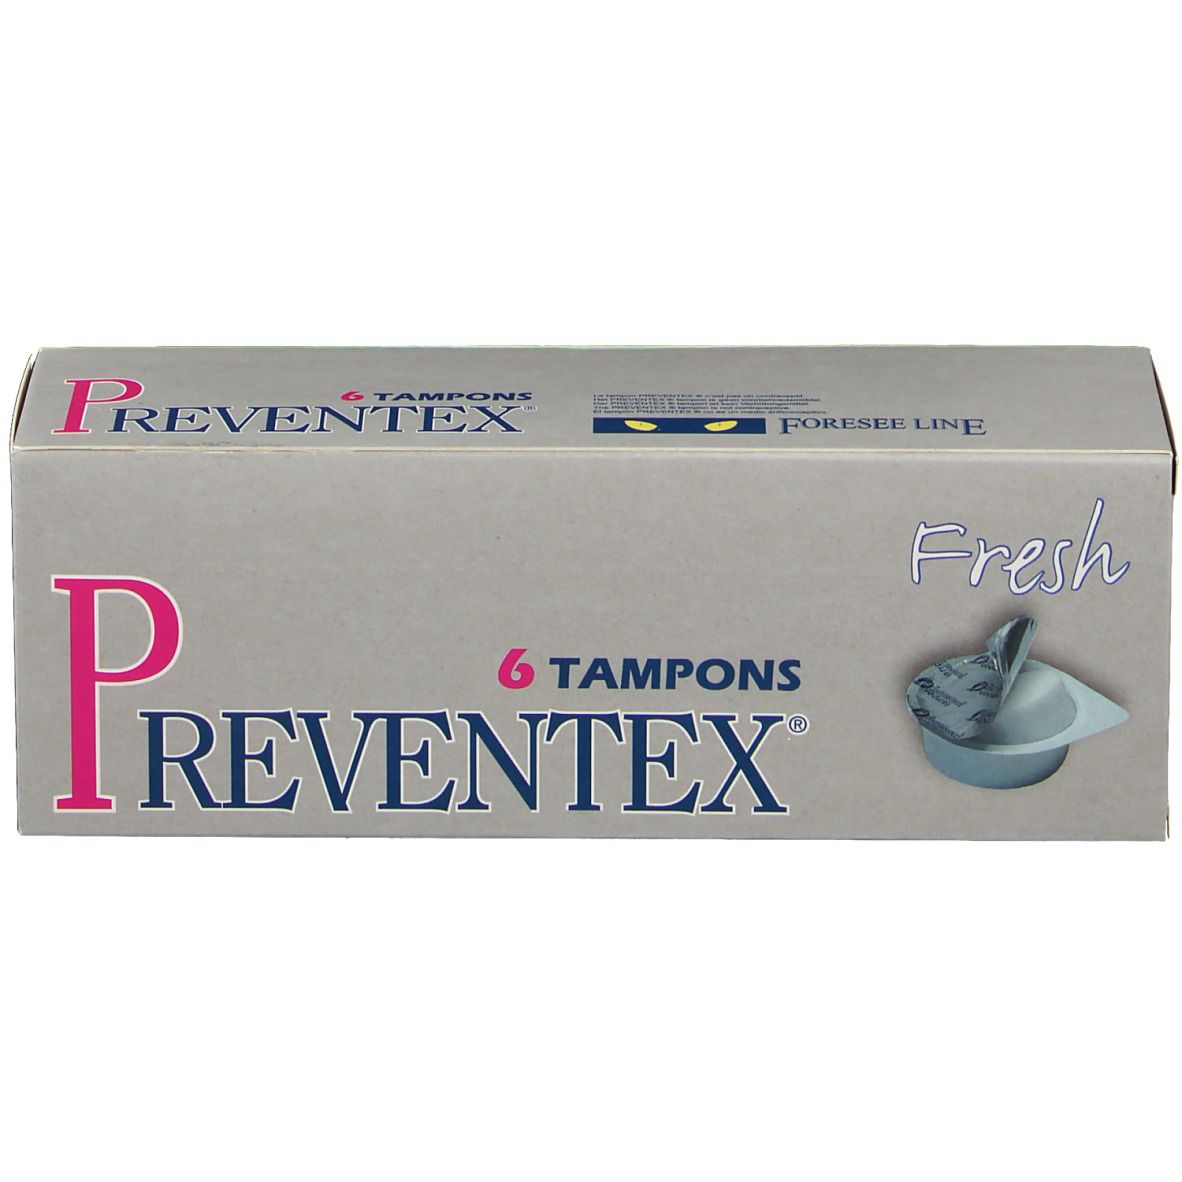 Preventex Tampons Fresh